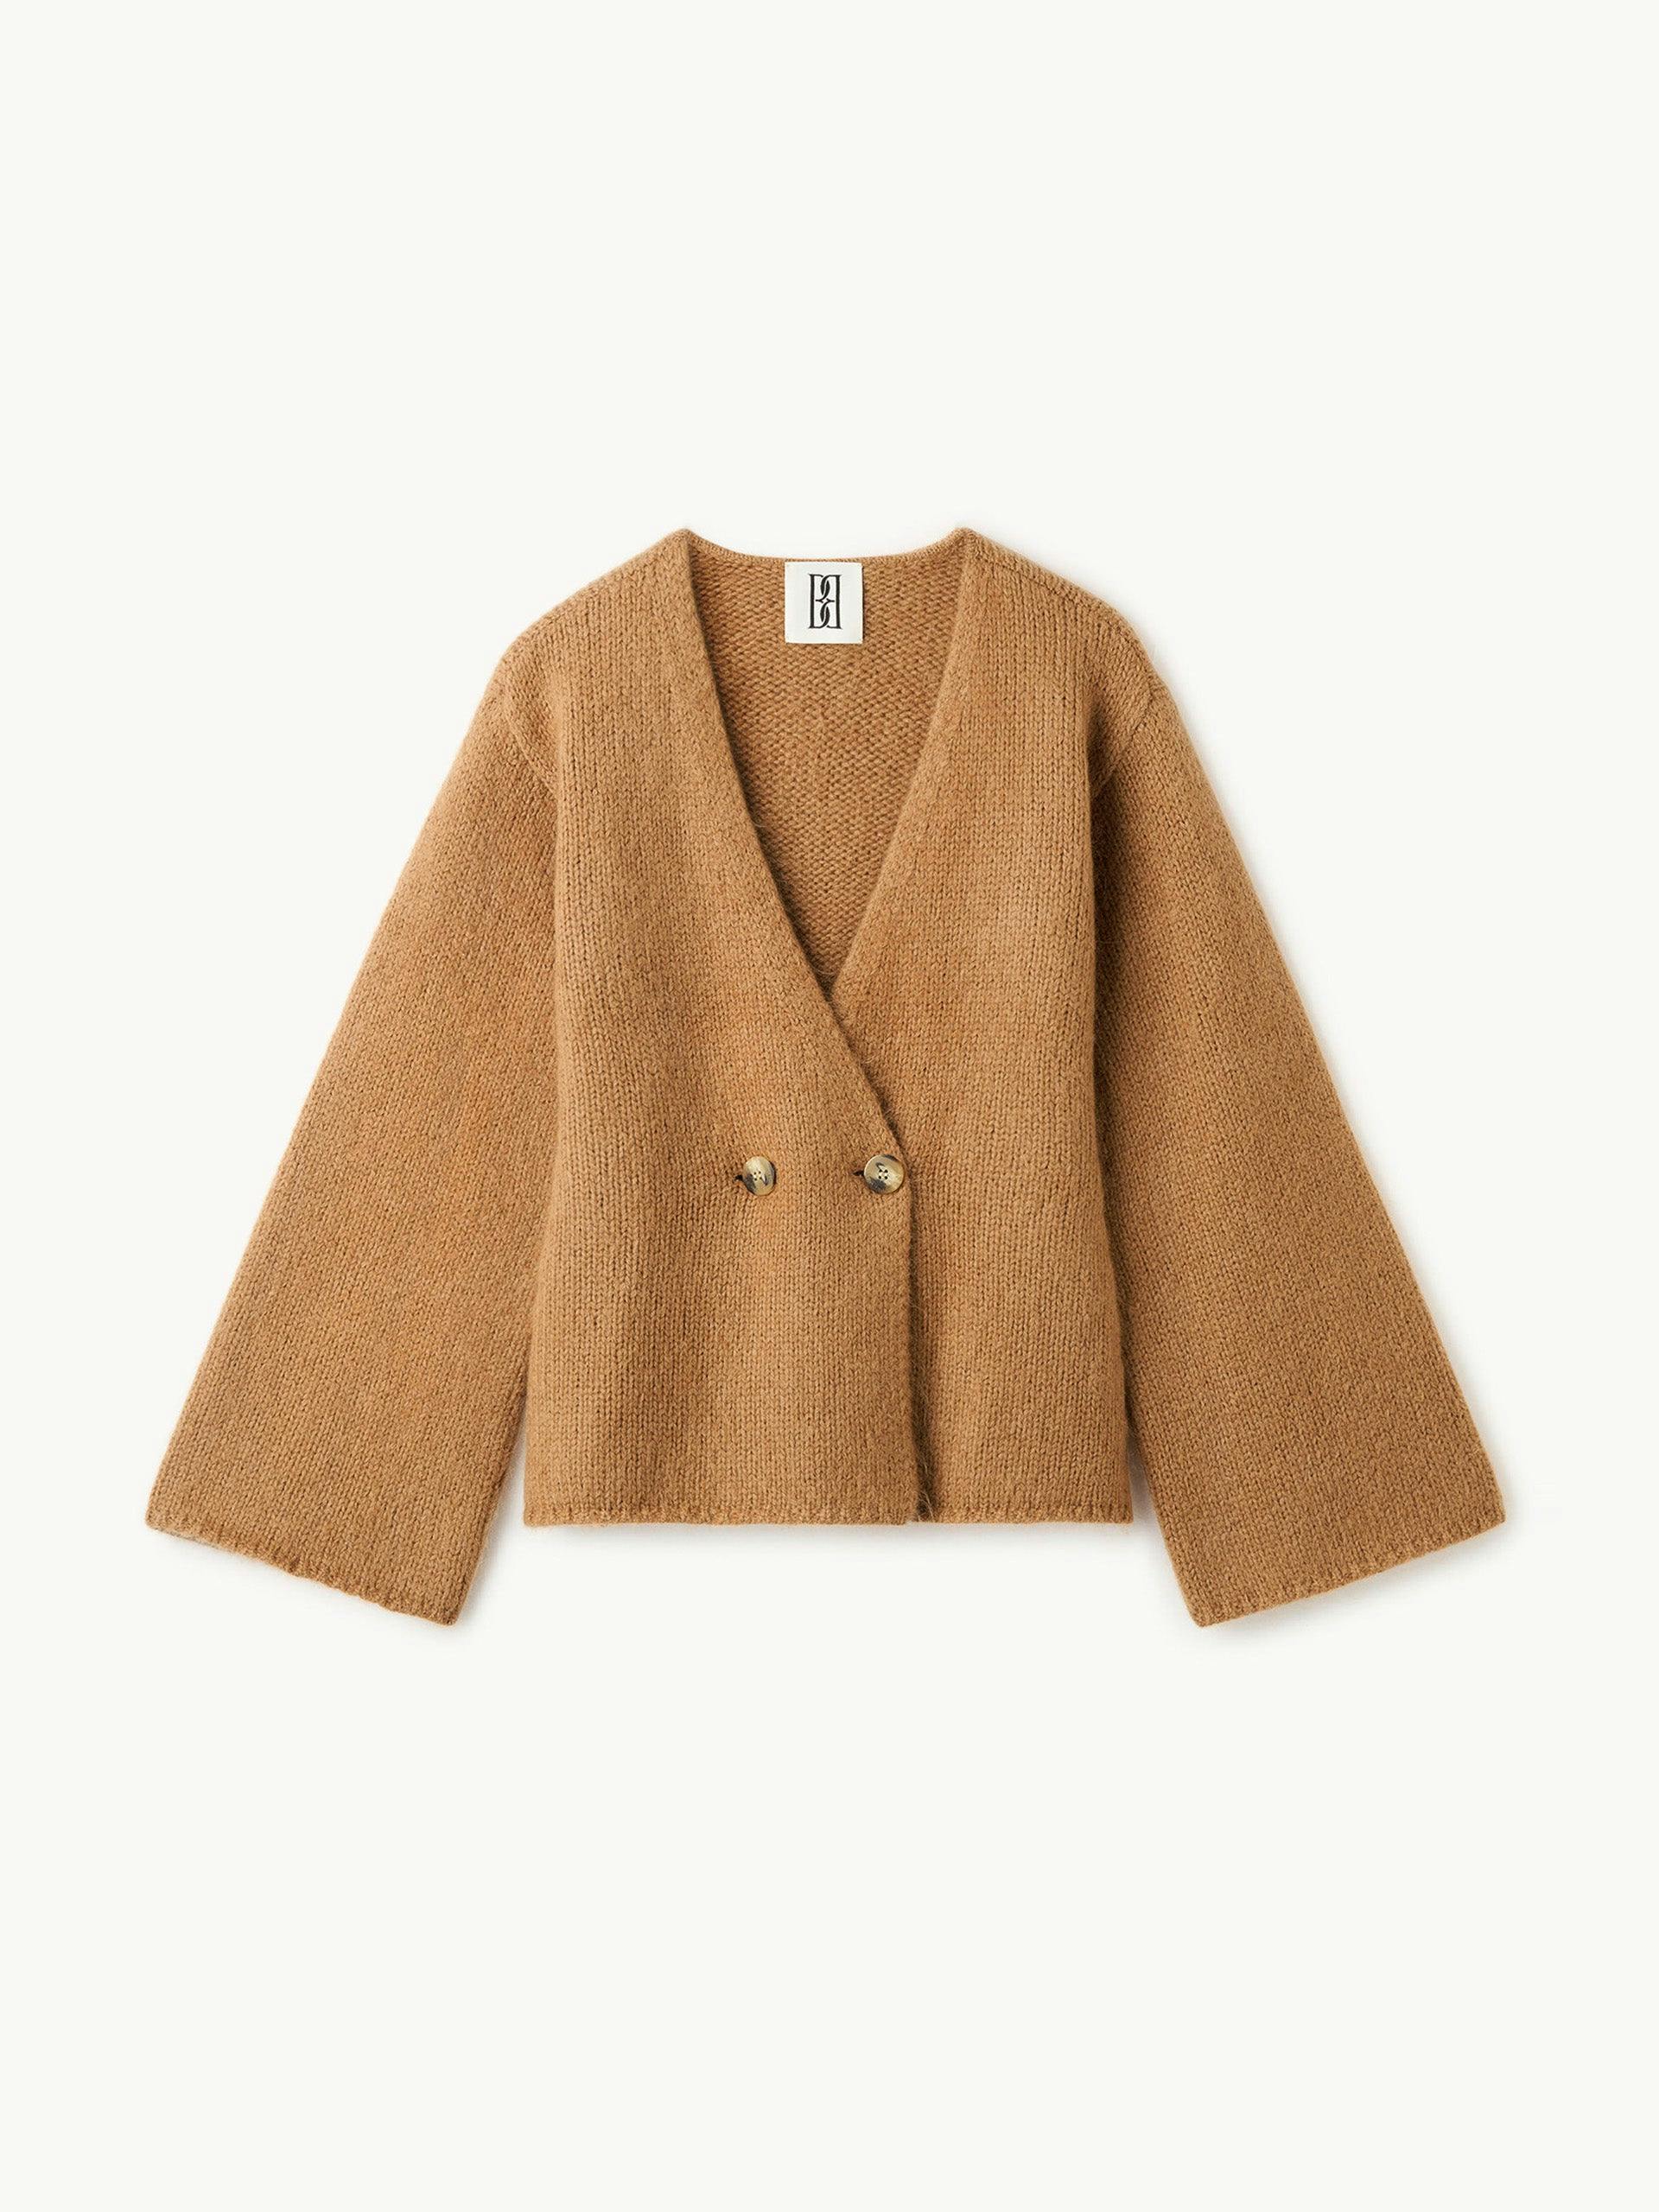 Tinley wool-blend brown cardigan